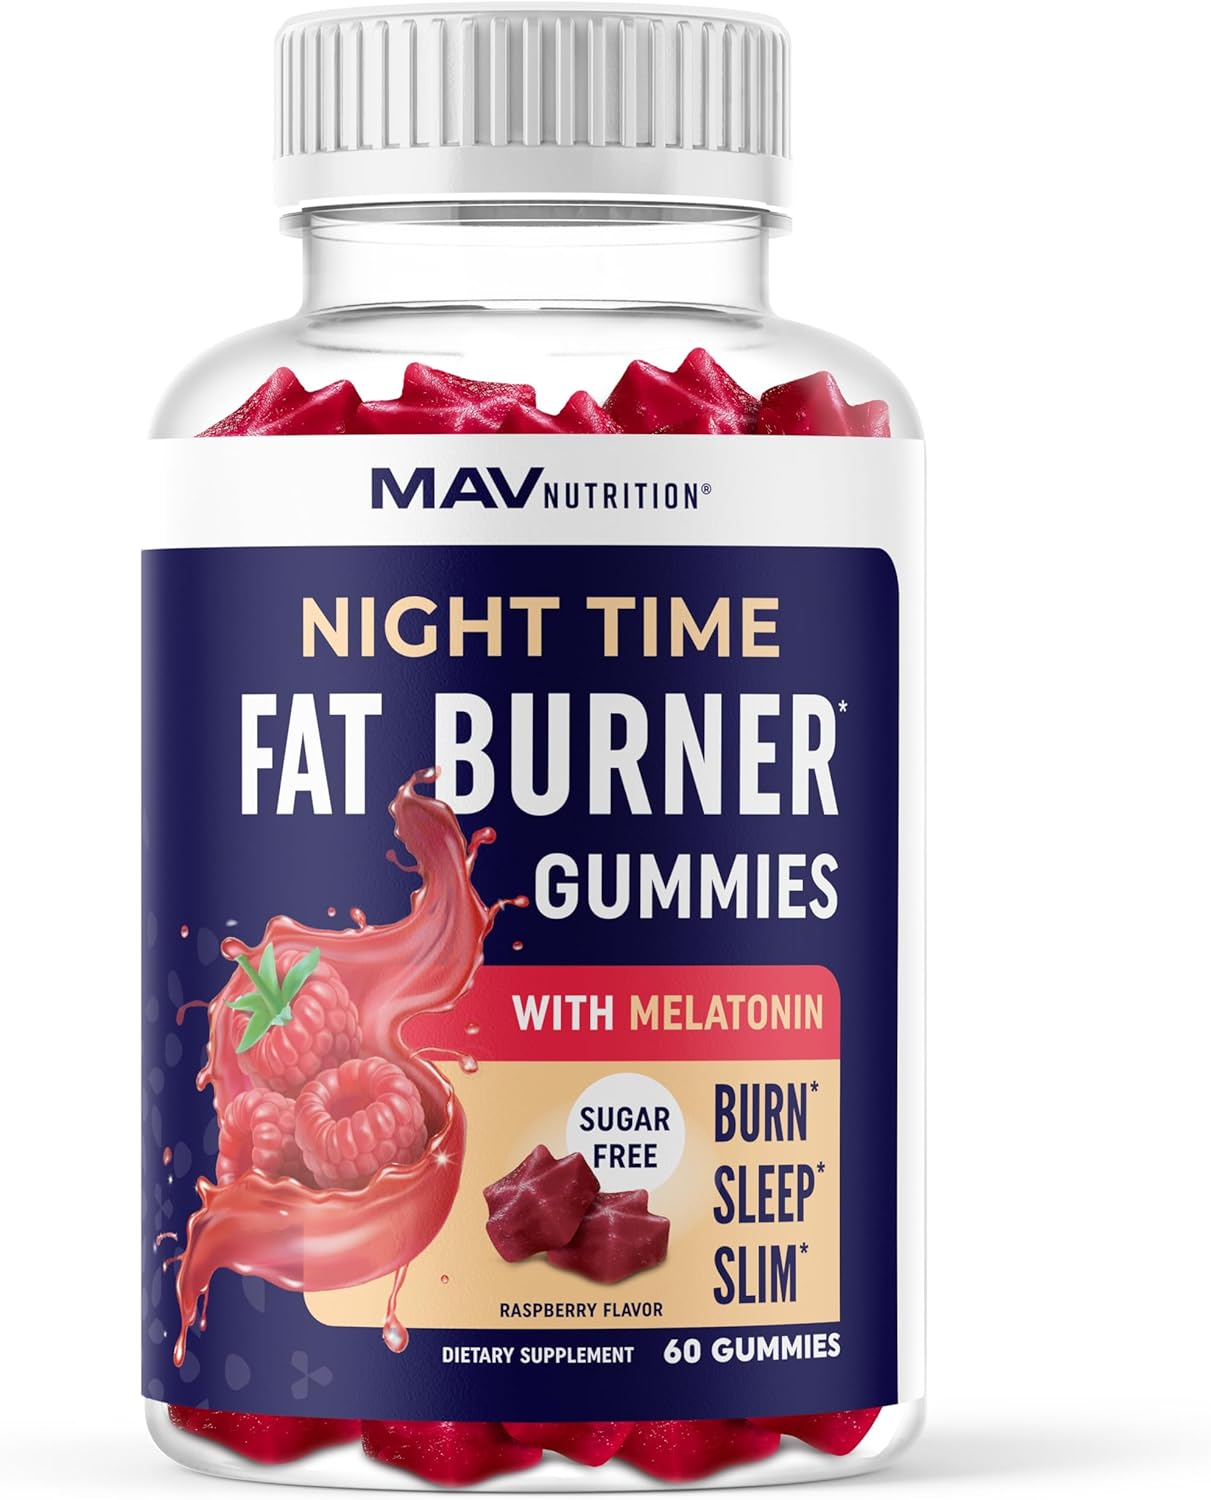 Night Time Fat Burner Gummies Review